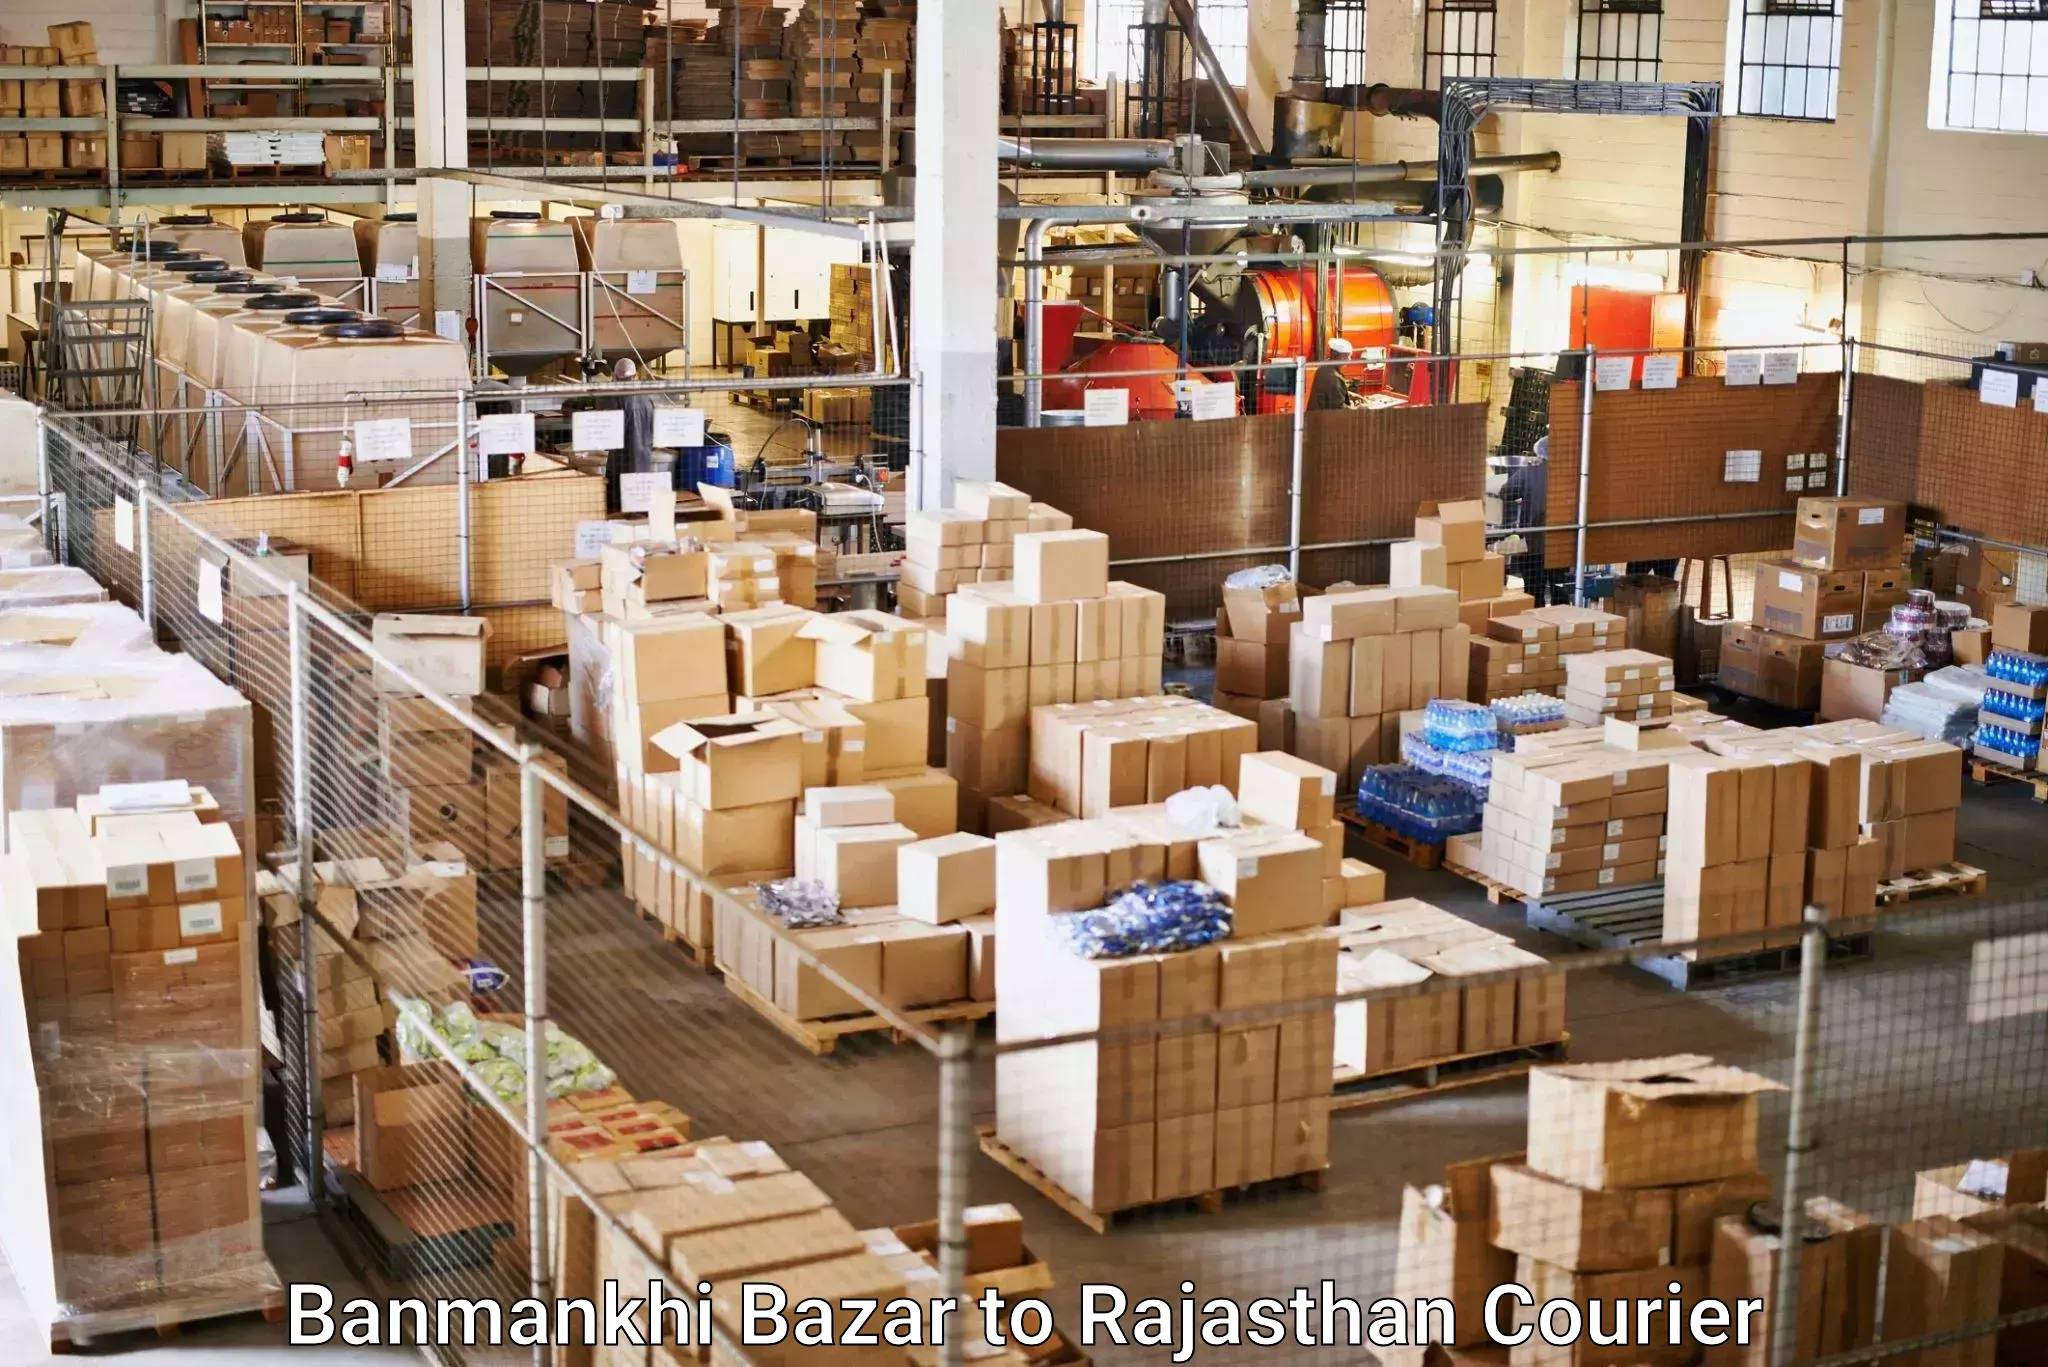 Urgent courier needs Banmankhi Bazar to Rajasthan